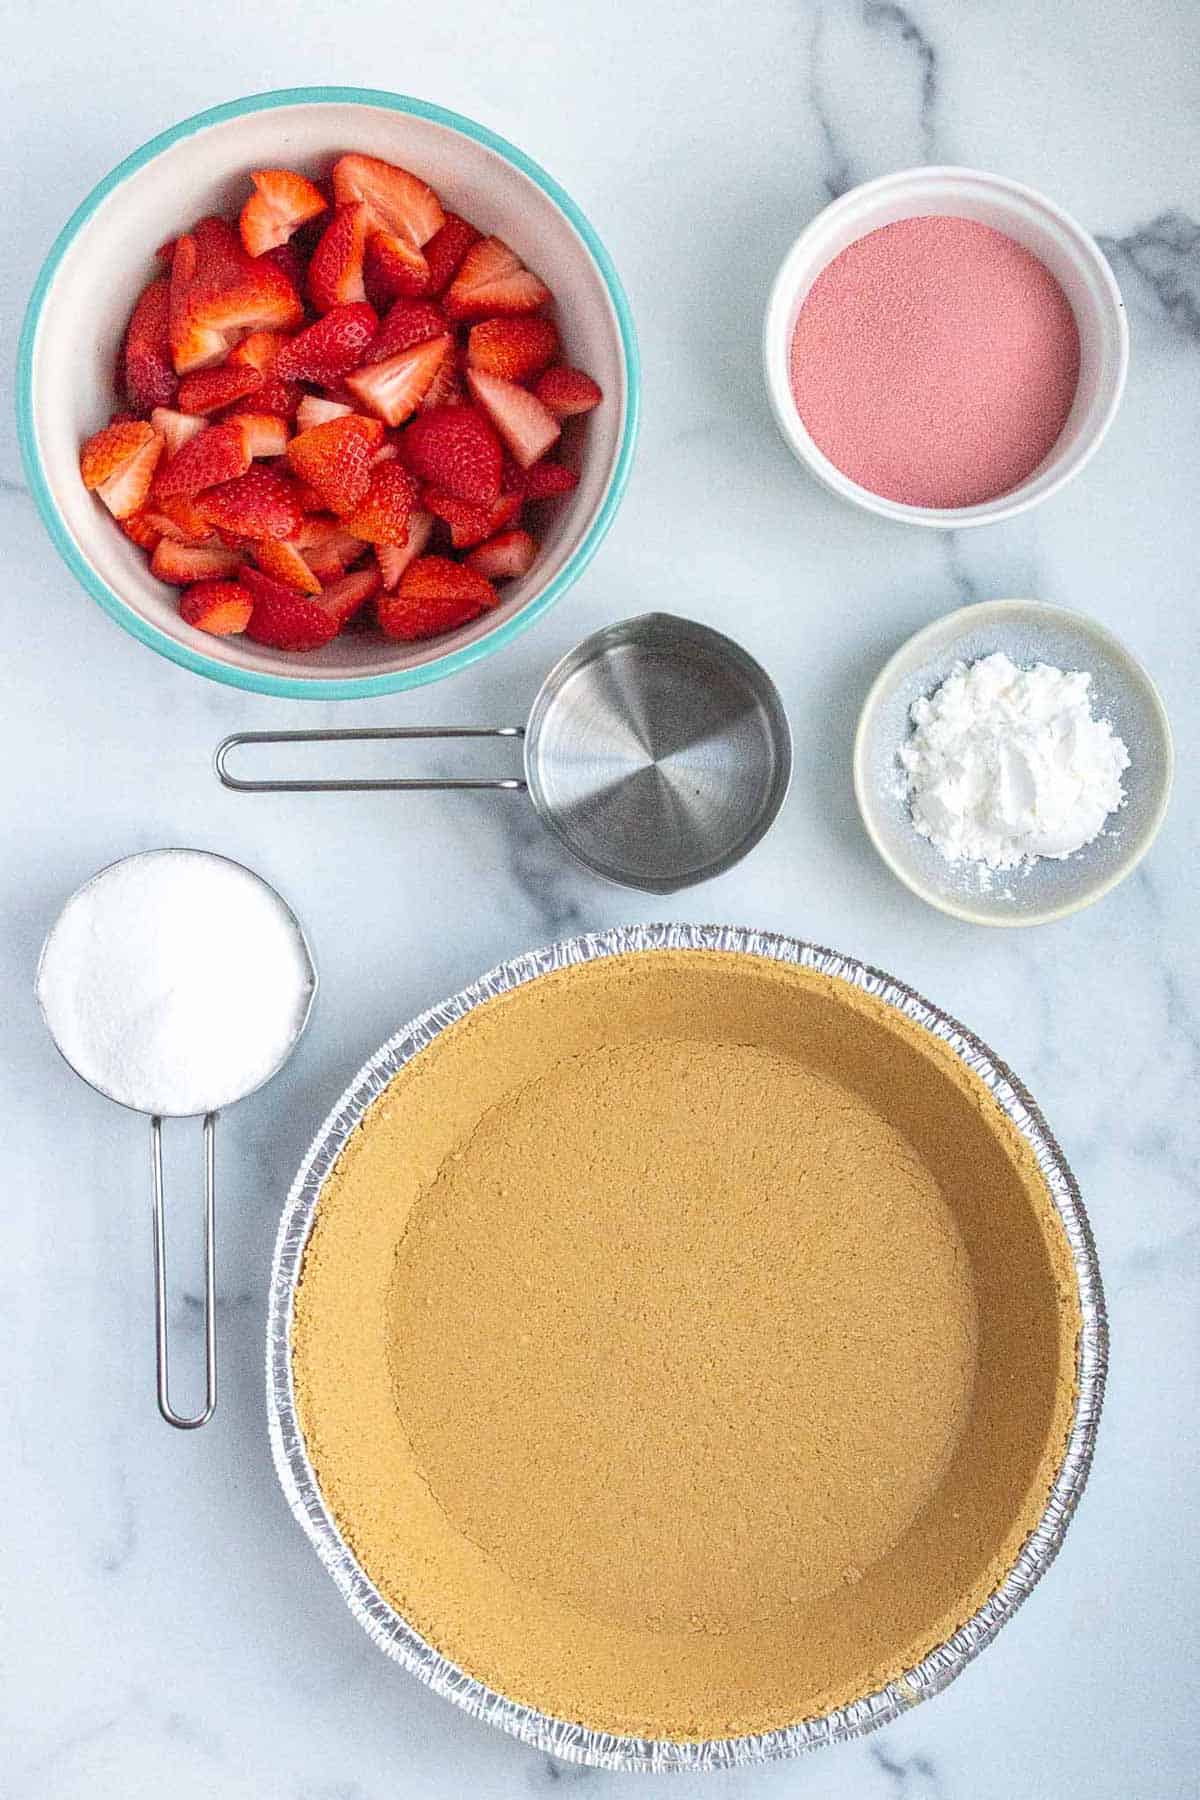 Strawberry Jello Pie Ingredients: fresh strawberries, strawberry jello, corn starch, water, sugar, and a graham cracker pie crust.